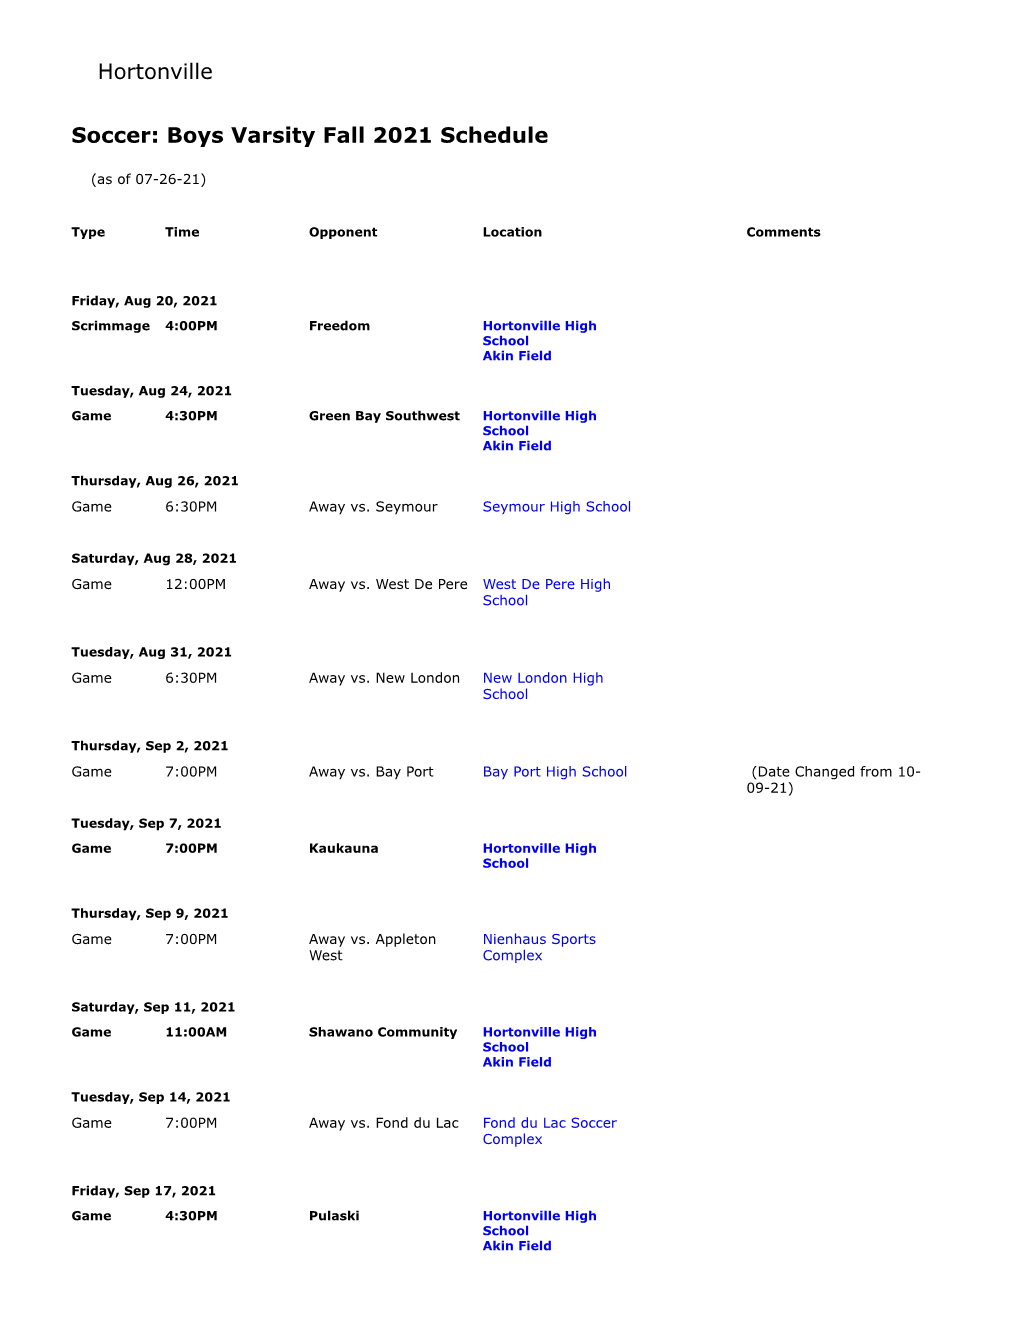 Hortonville Soccer: Boys Varsity Fall 2021 Schedule